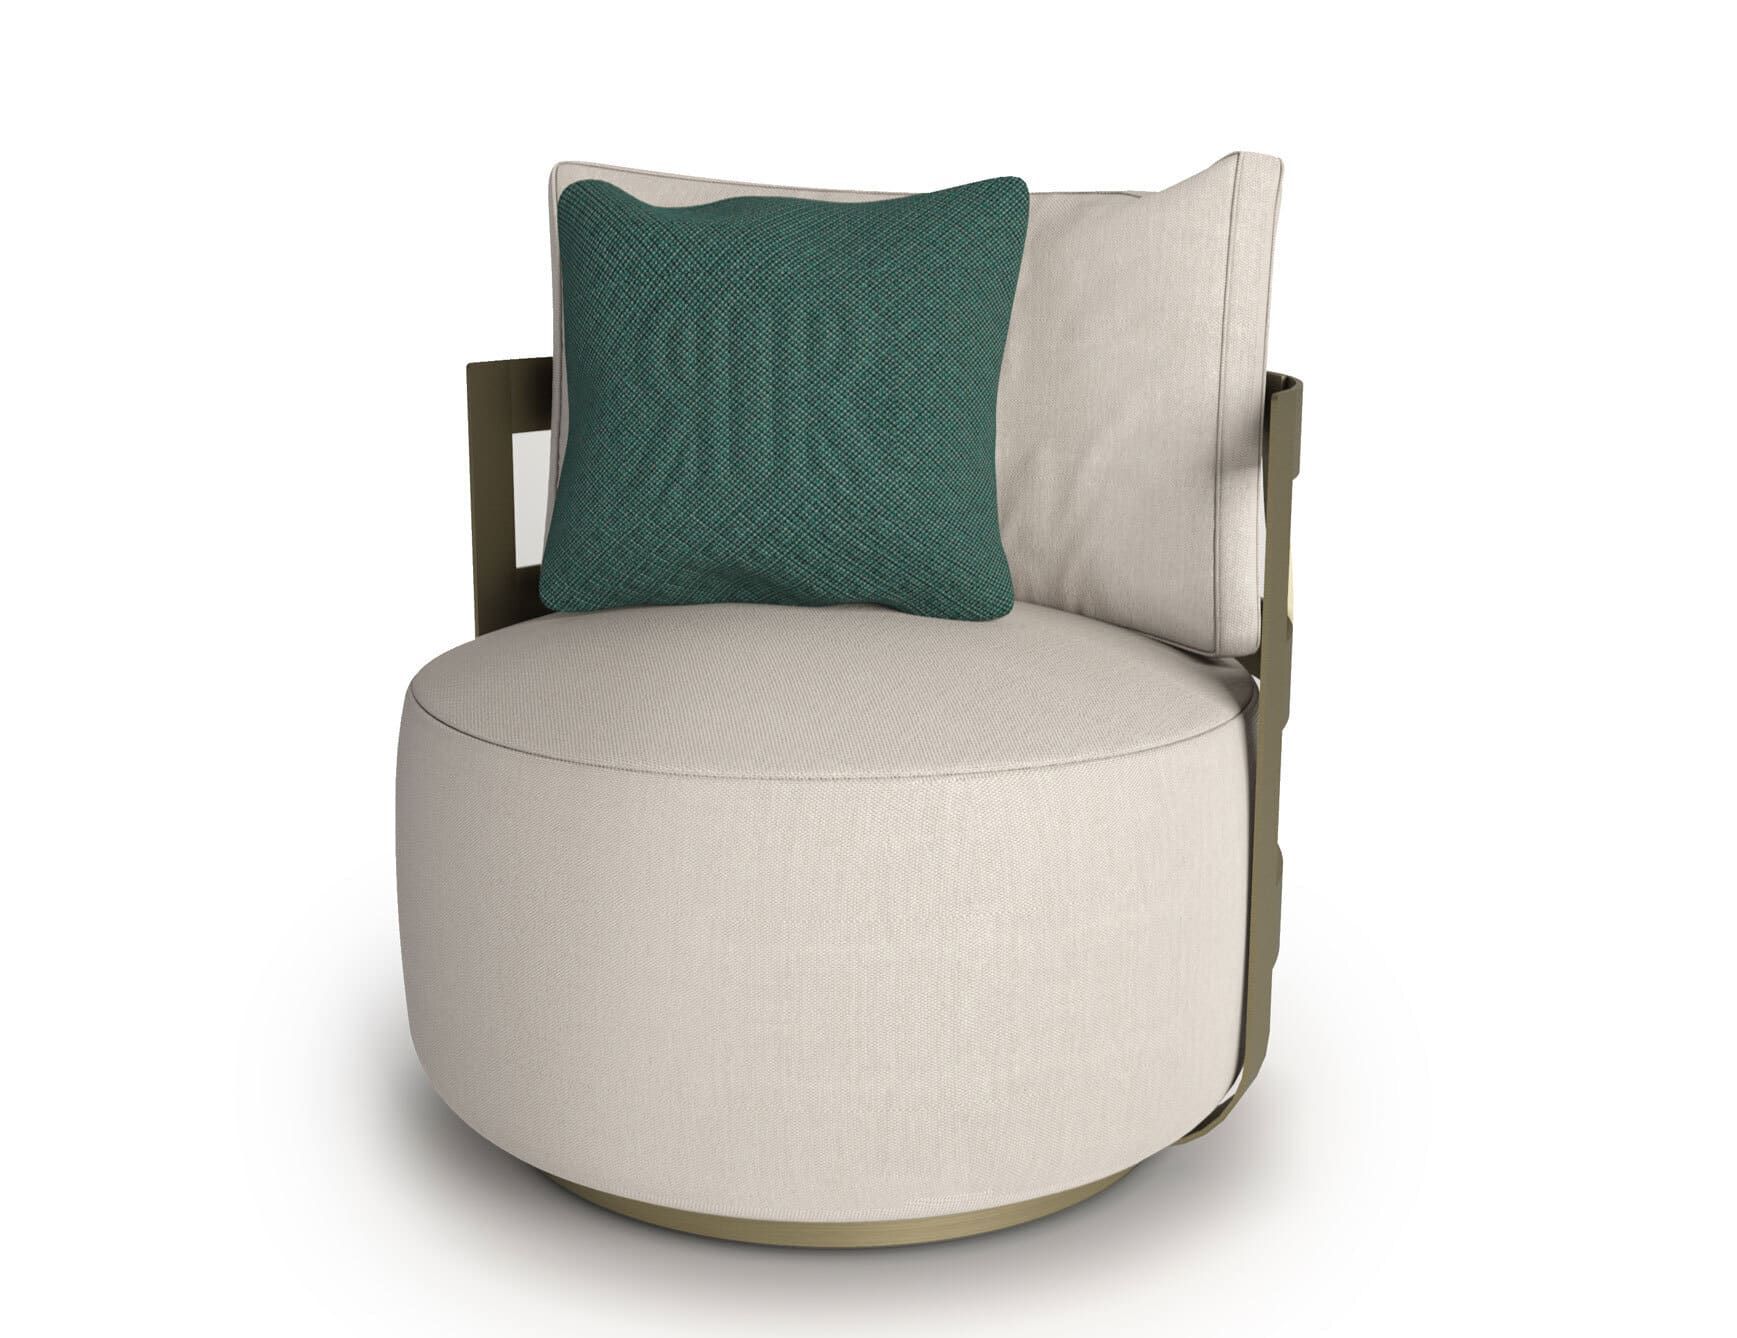 Dafne Poltrona Girevole modern luxury sofa chair with beige fabric